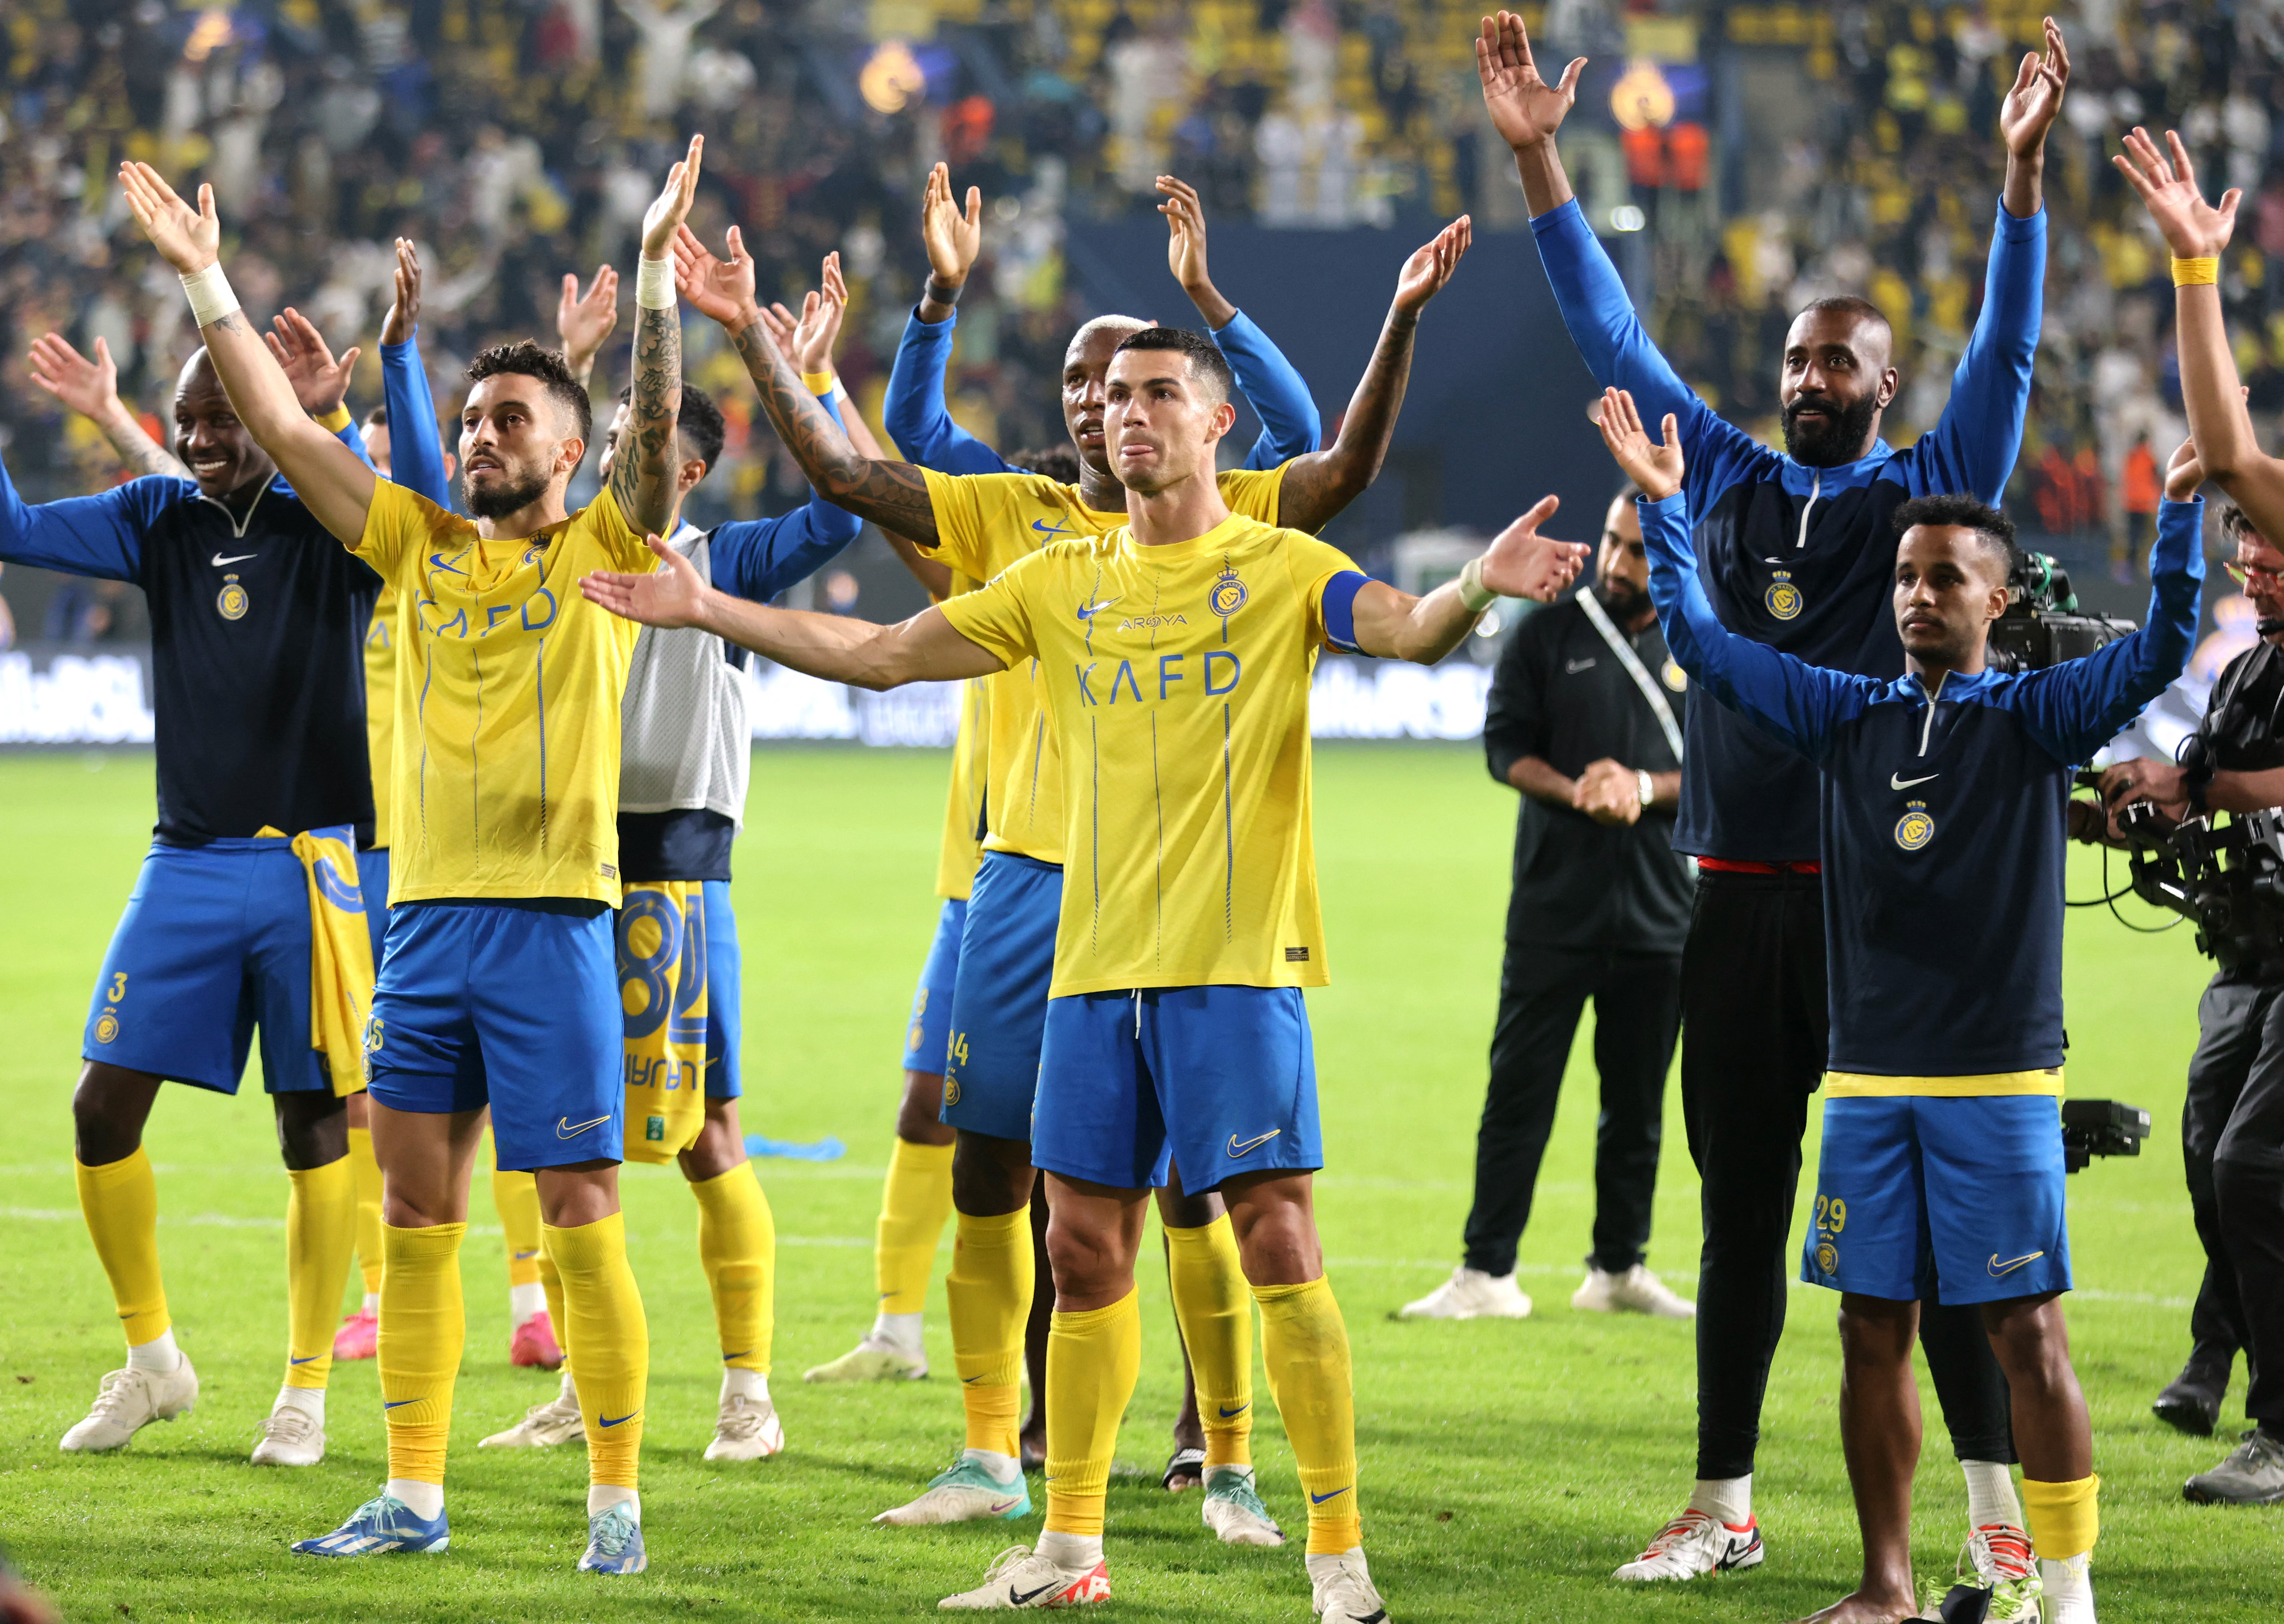 Ten-man Al-Nassr secure spot in Asian Champions League last 16